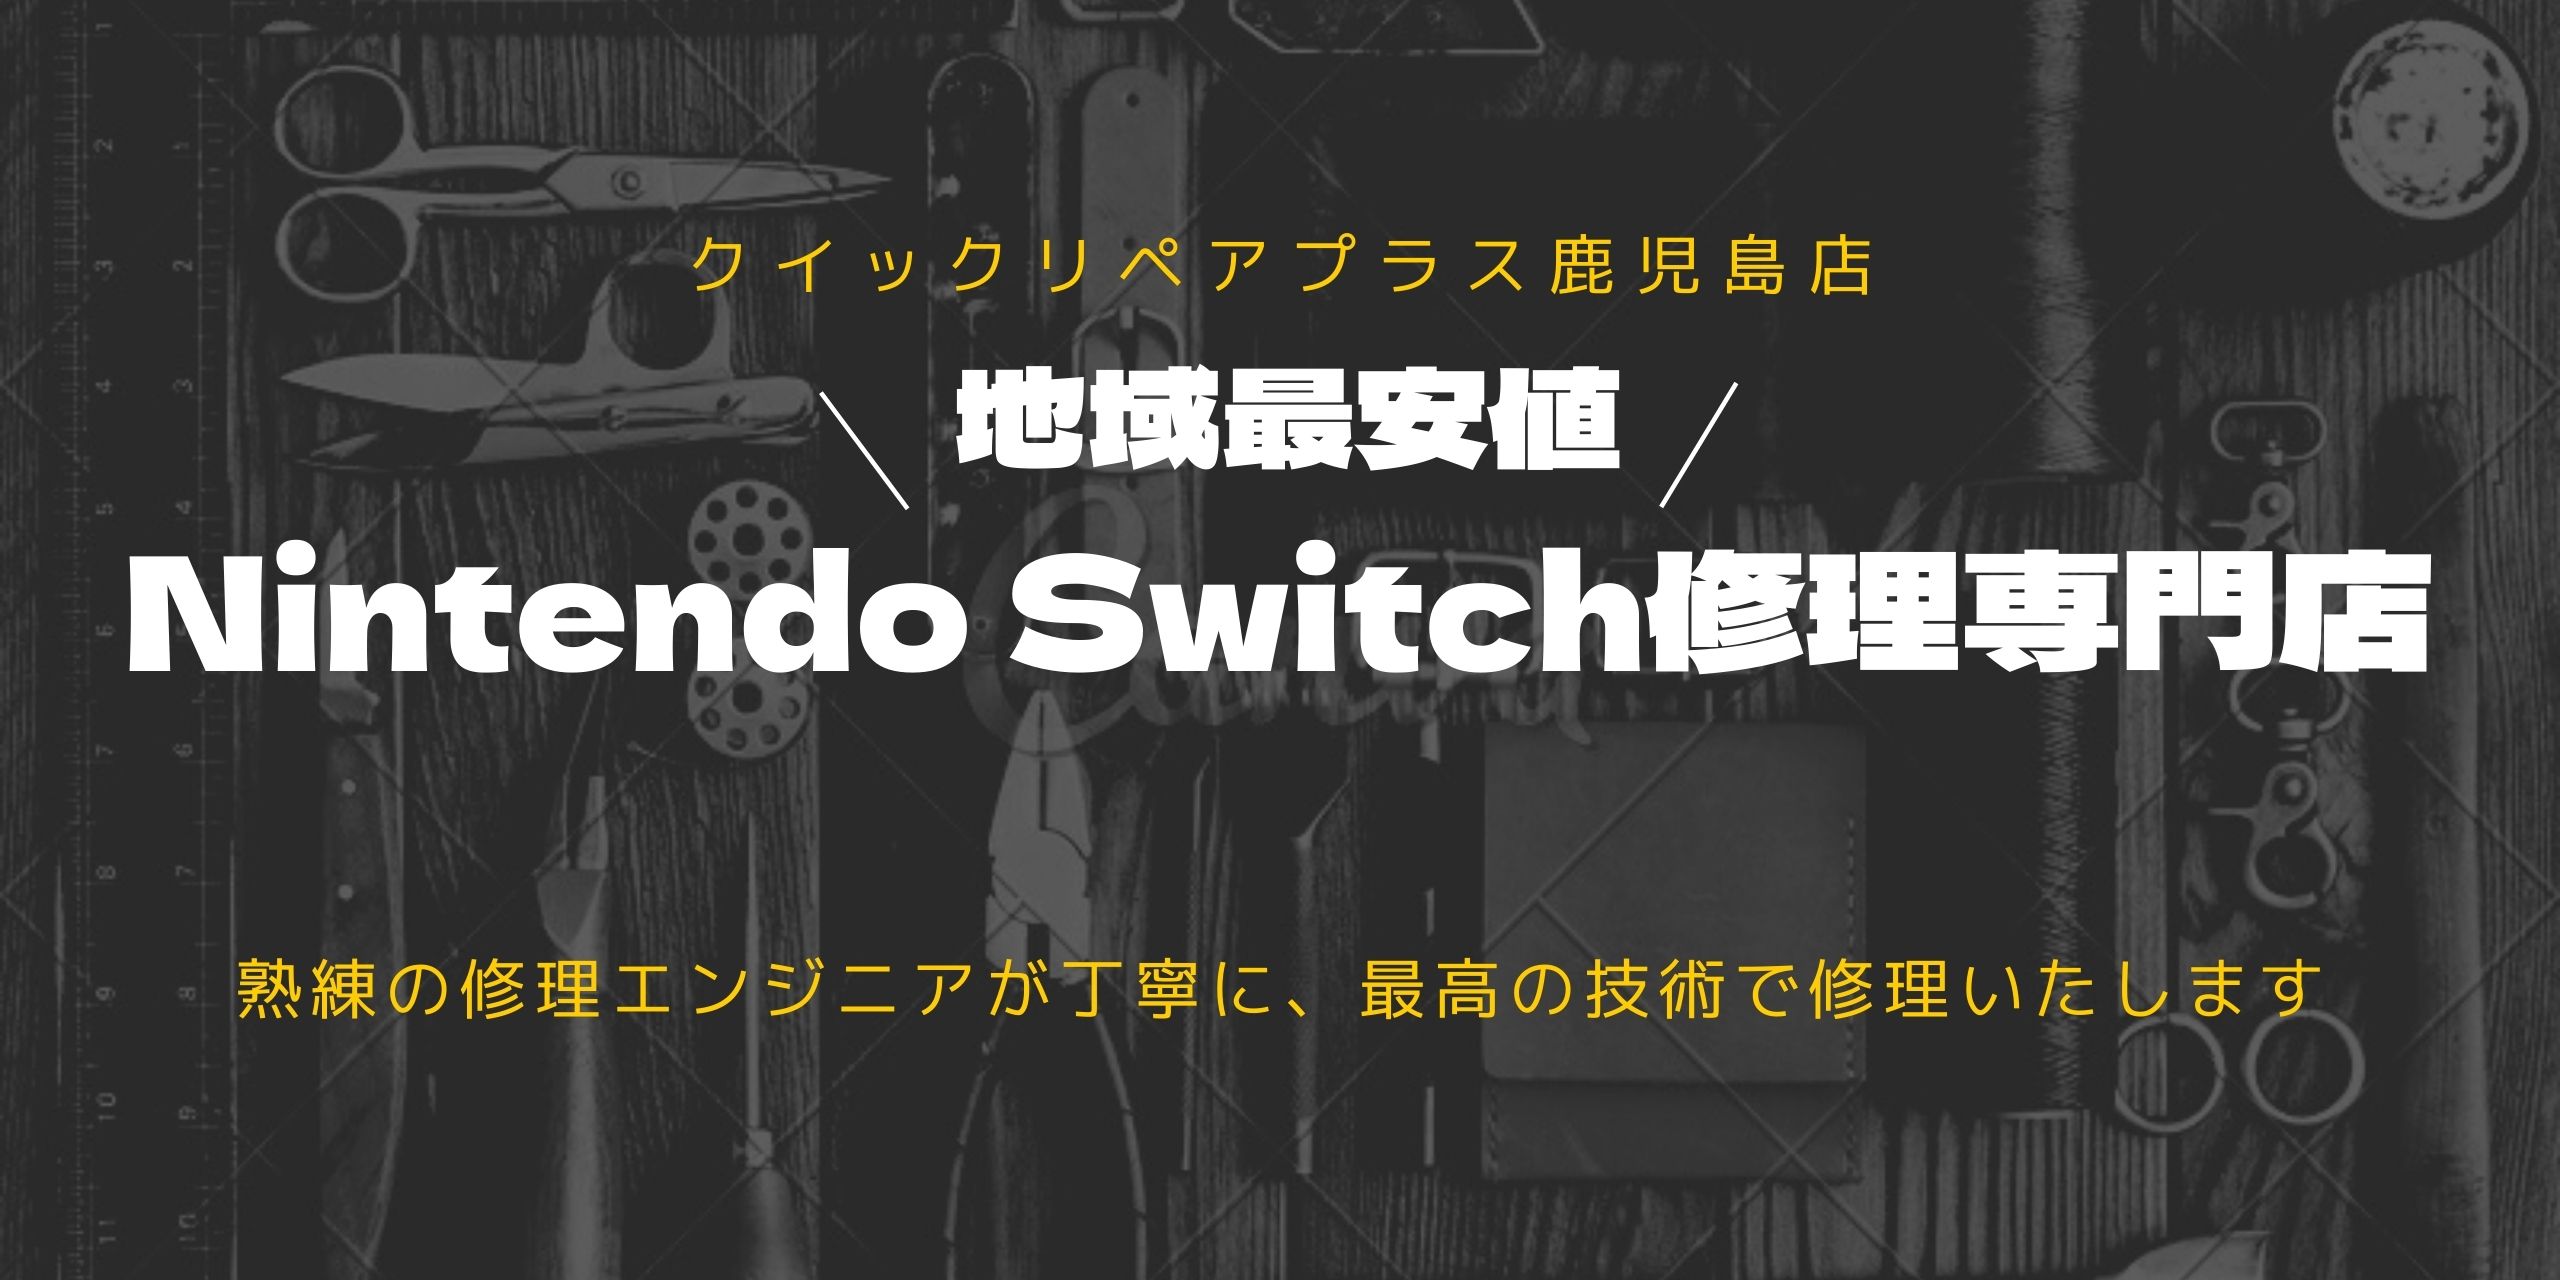 <span class="dojodigital_toggle_title">Nintendo Switch修理するならクイックリペアプラス鹿児島店</span>